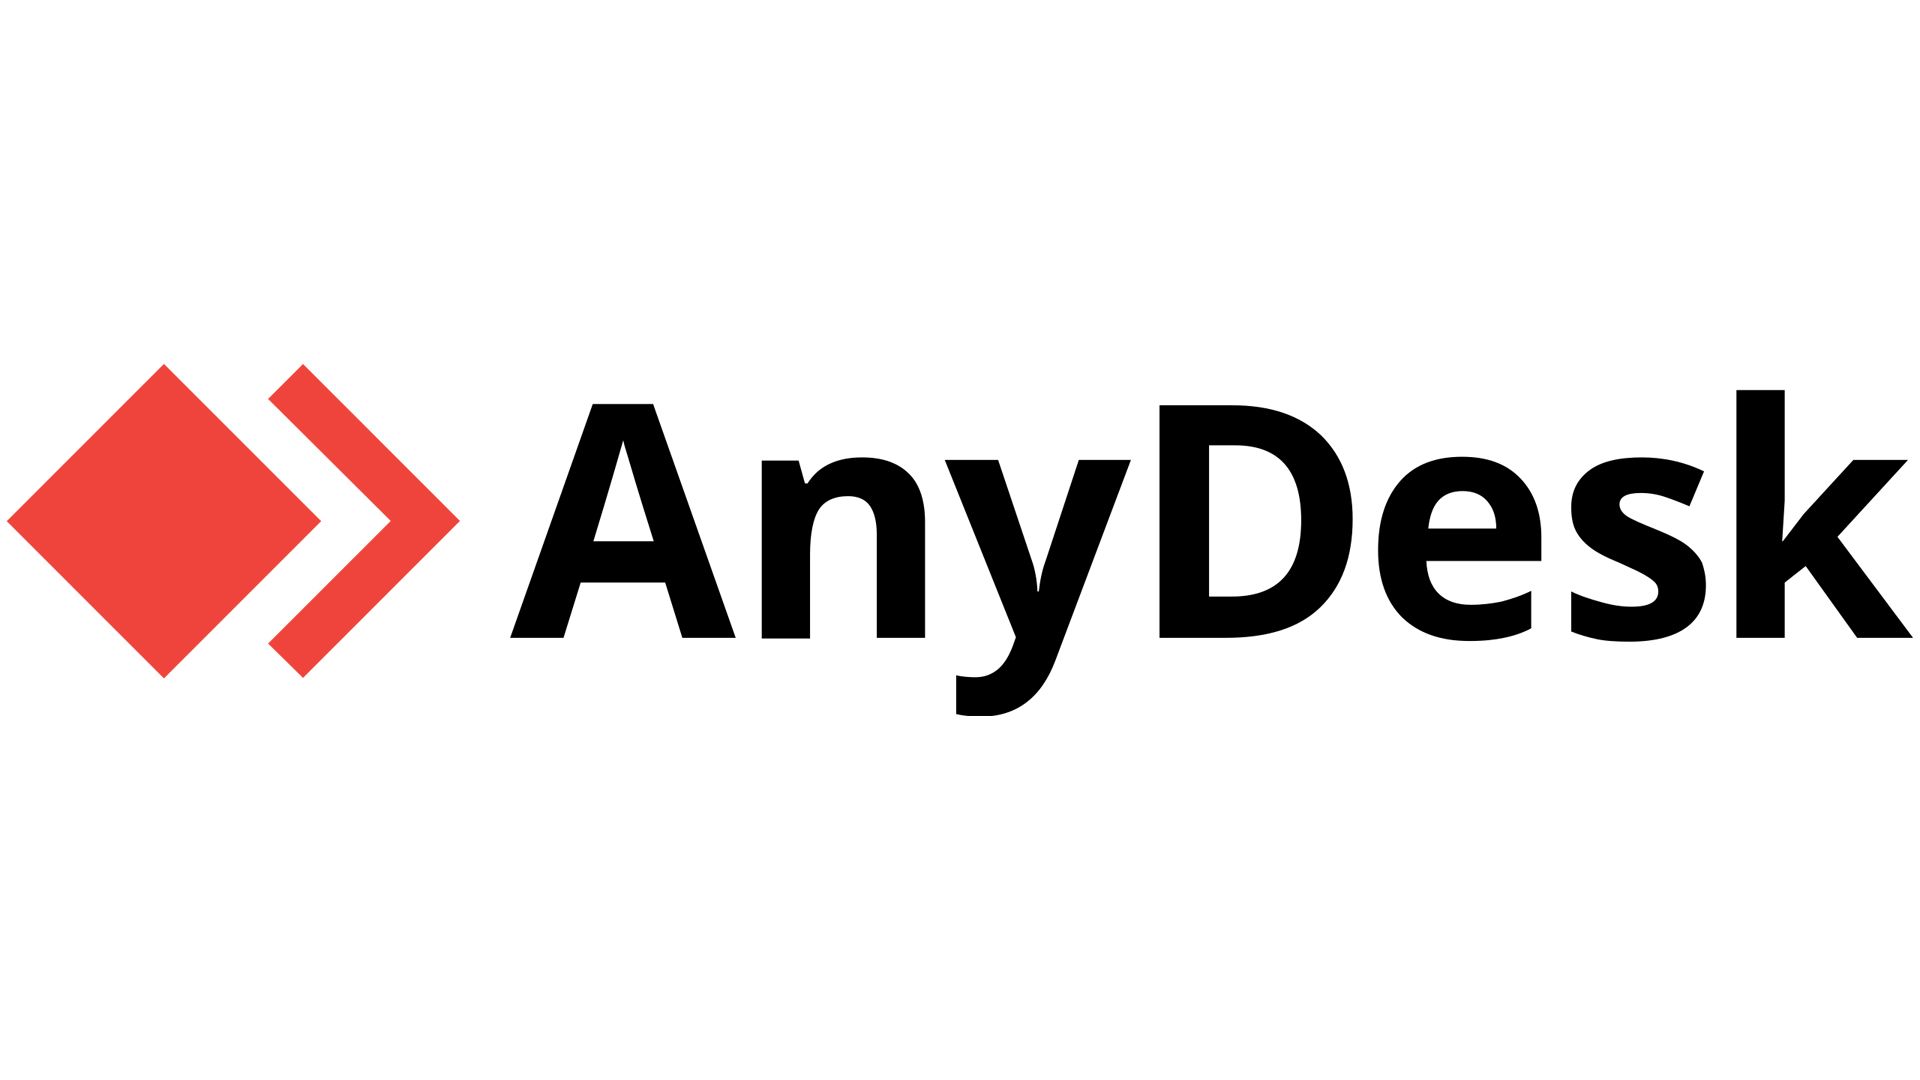 Any desk com. ANYDESK. ANYDESK лого. ANYDESK ярлык. Анидеск картинка.